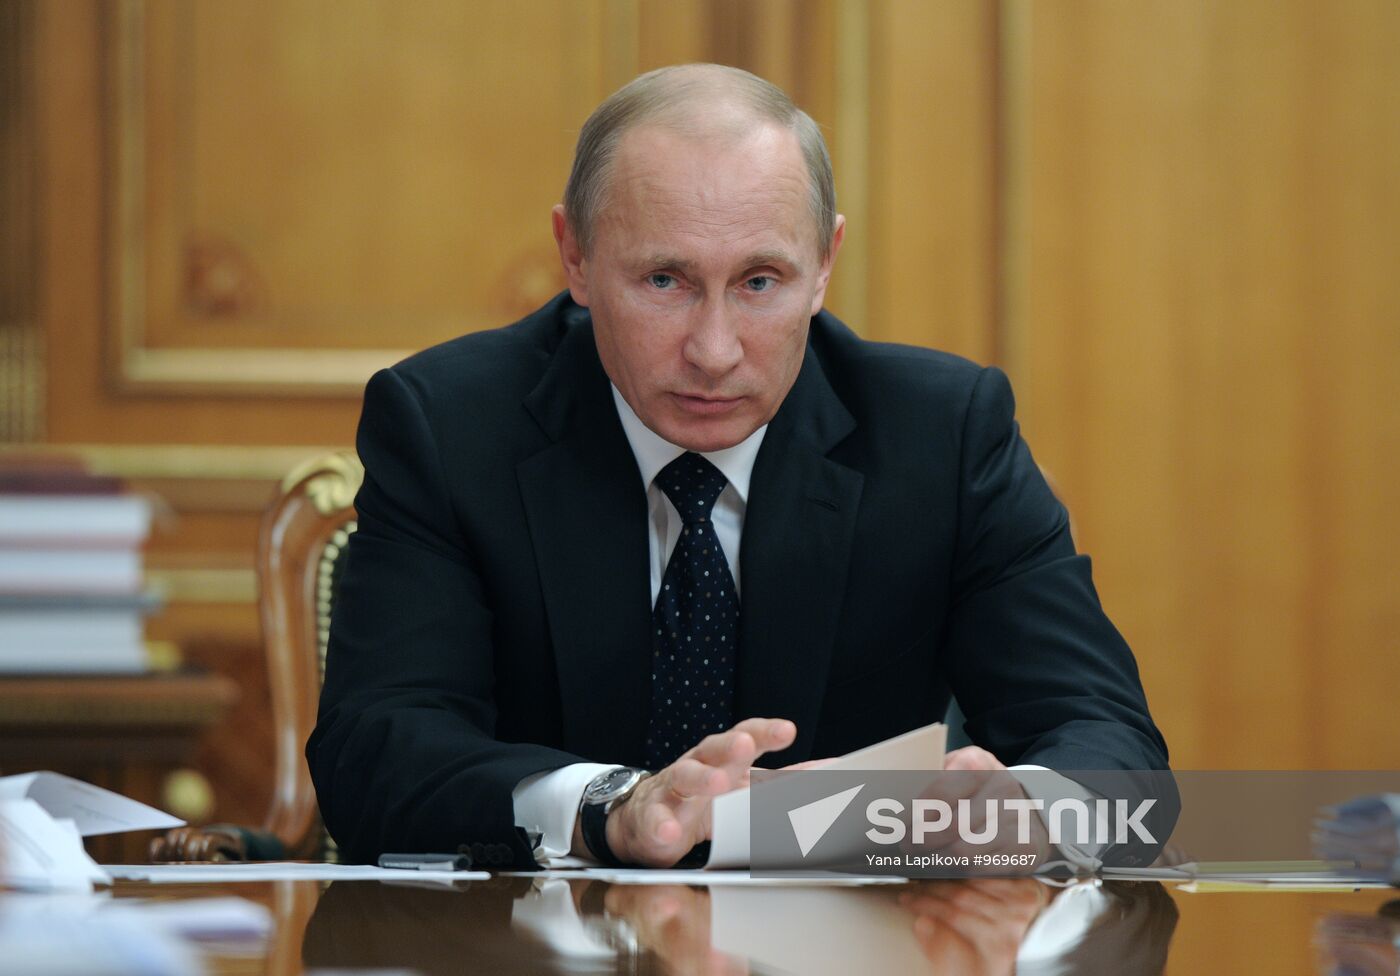 Vladimir Putin holds Government House meeting